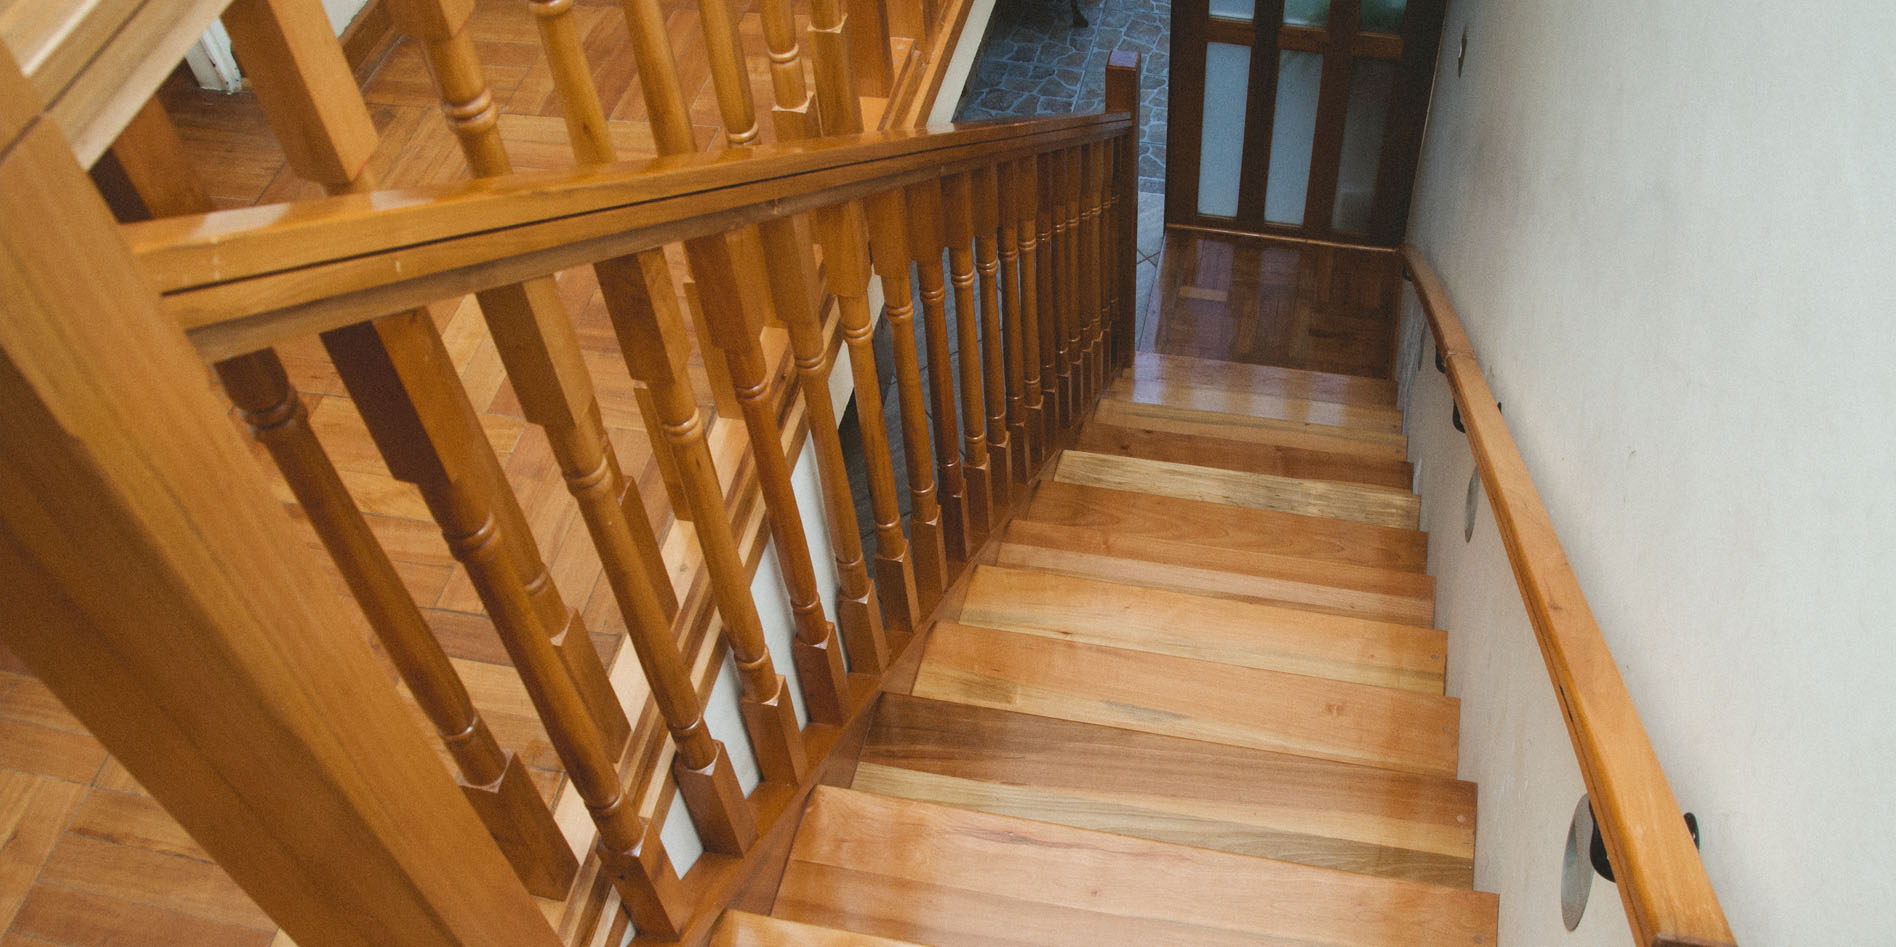 Escaleras rectas « Escaleras de madera, barandas y pasamanos.